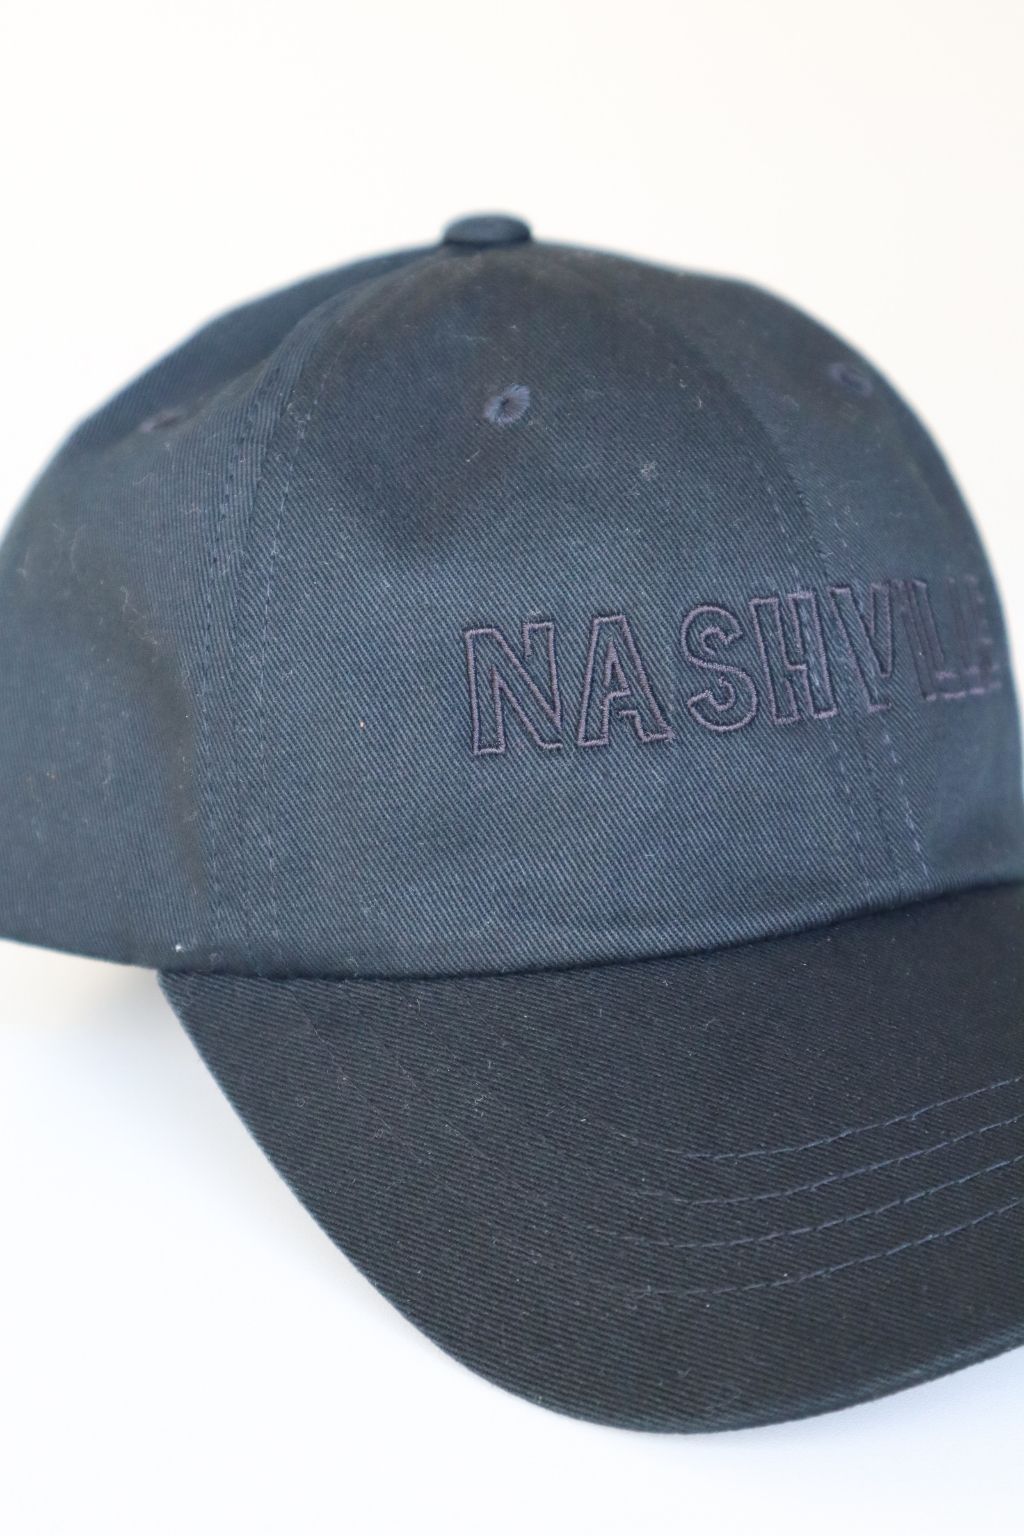 Nashville Embroidered Baseball Cap Black